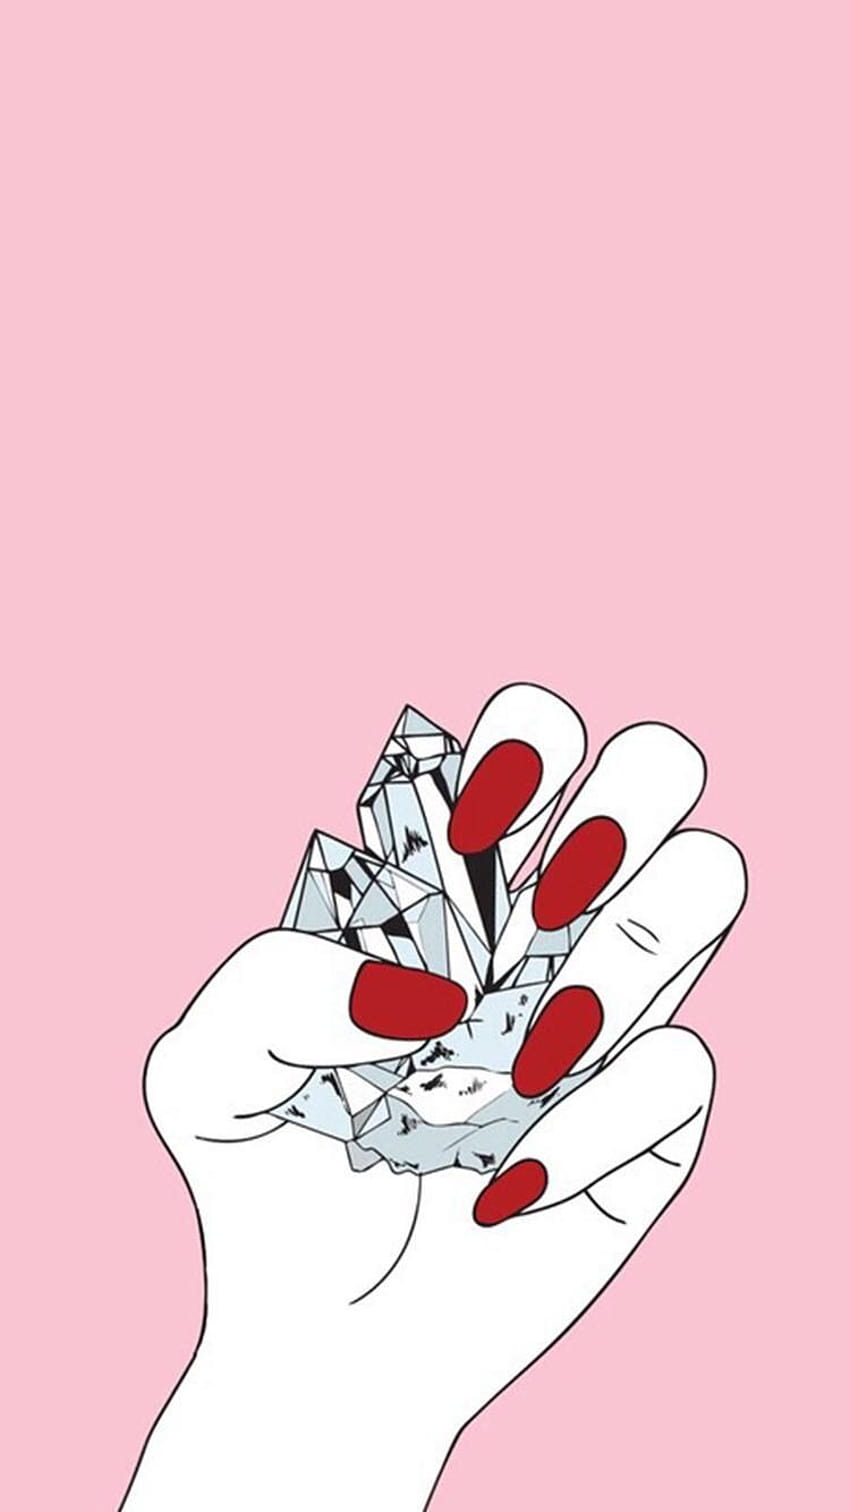 kuku,merah,tangan,jari,isyarat,kuku,ilustrasi,ibu jari,tanaman,meng,hati,makian wallpaper ponsel HD